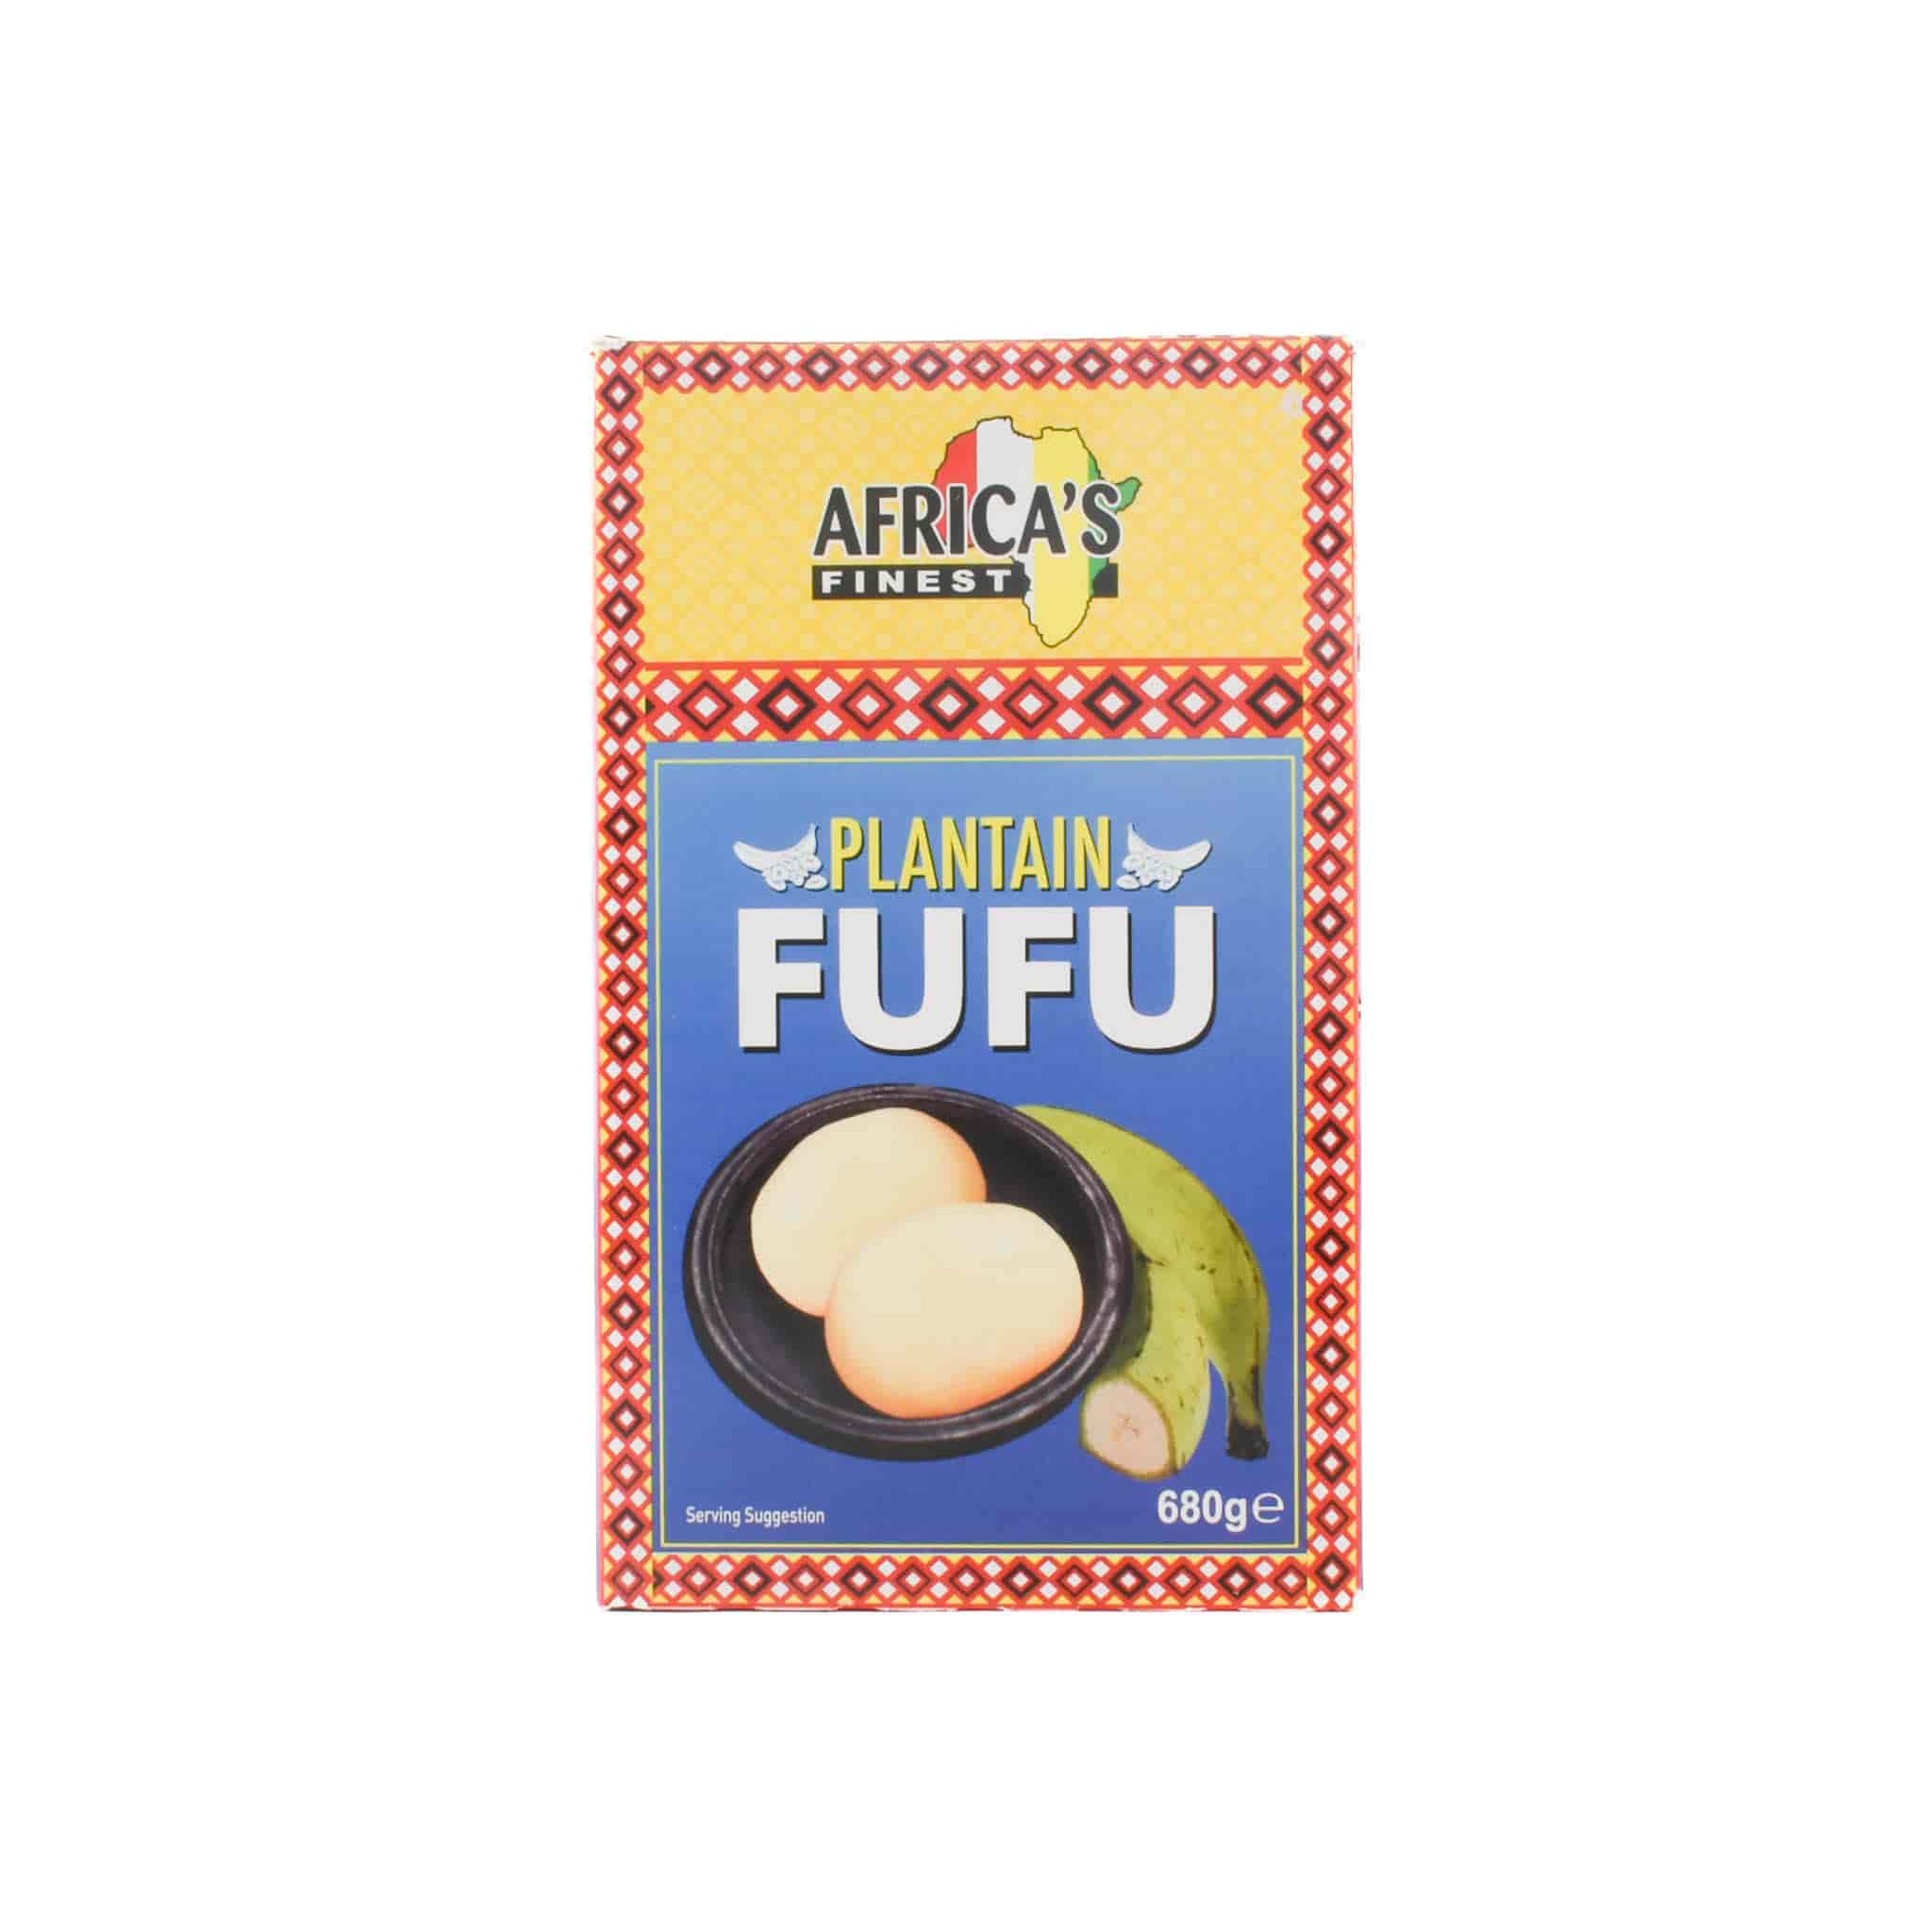 Africa's Finest Plantain Fufu, 680g